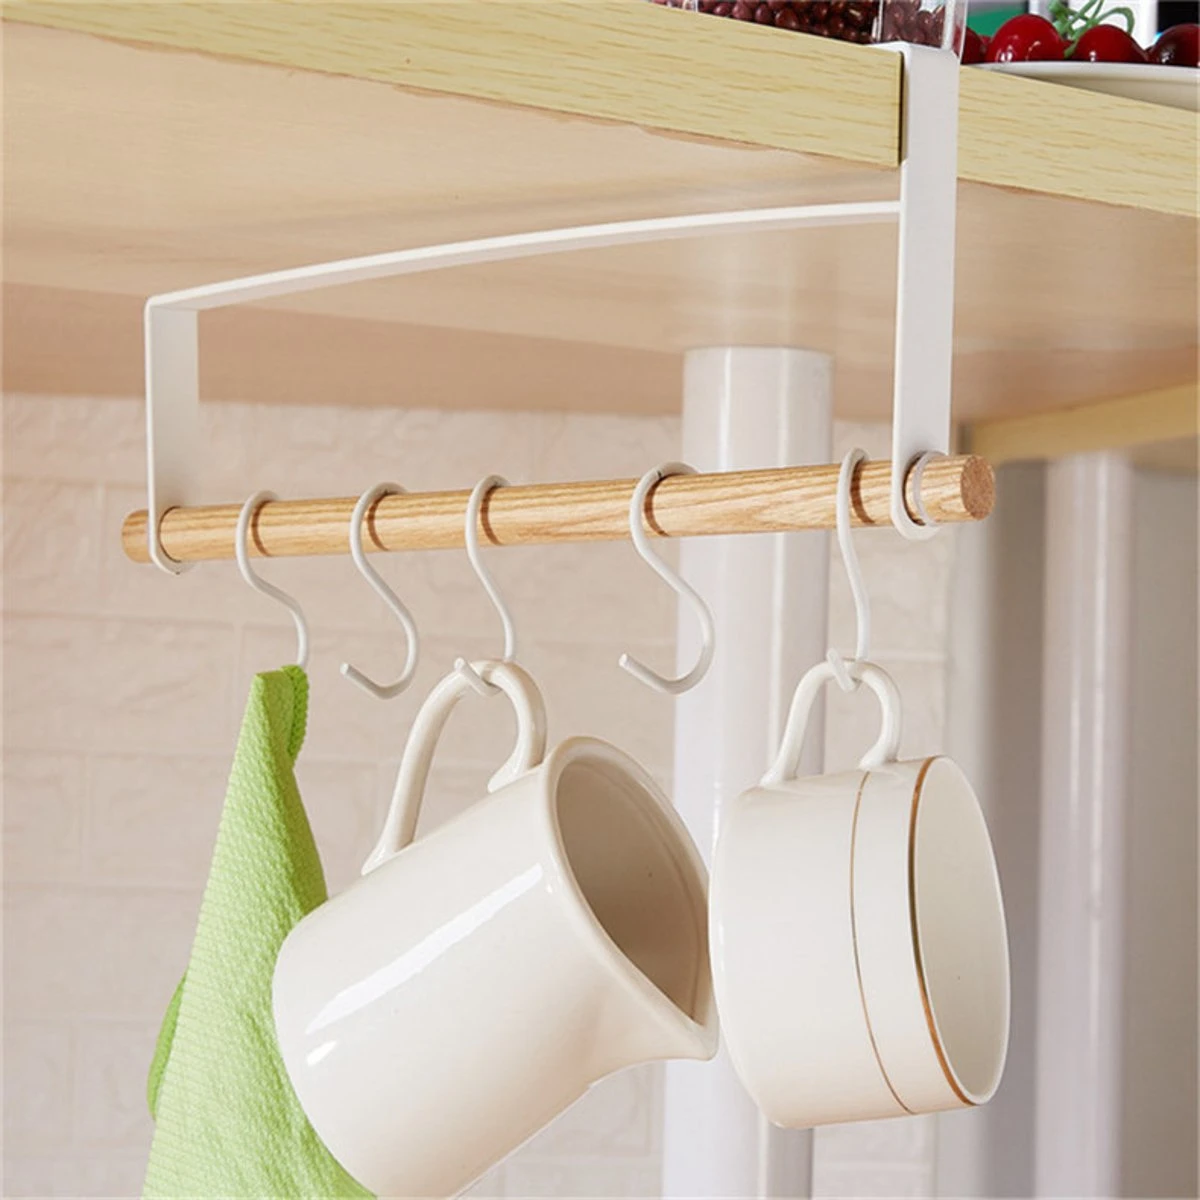 Kitchen Iron Hook Roll Paper Towel Holder Rack Organizer Home Storage Shelf Tool